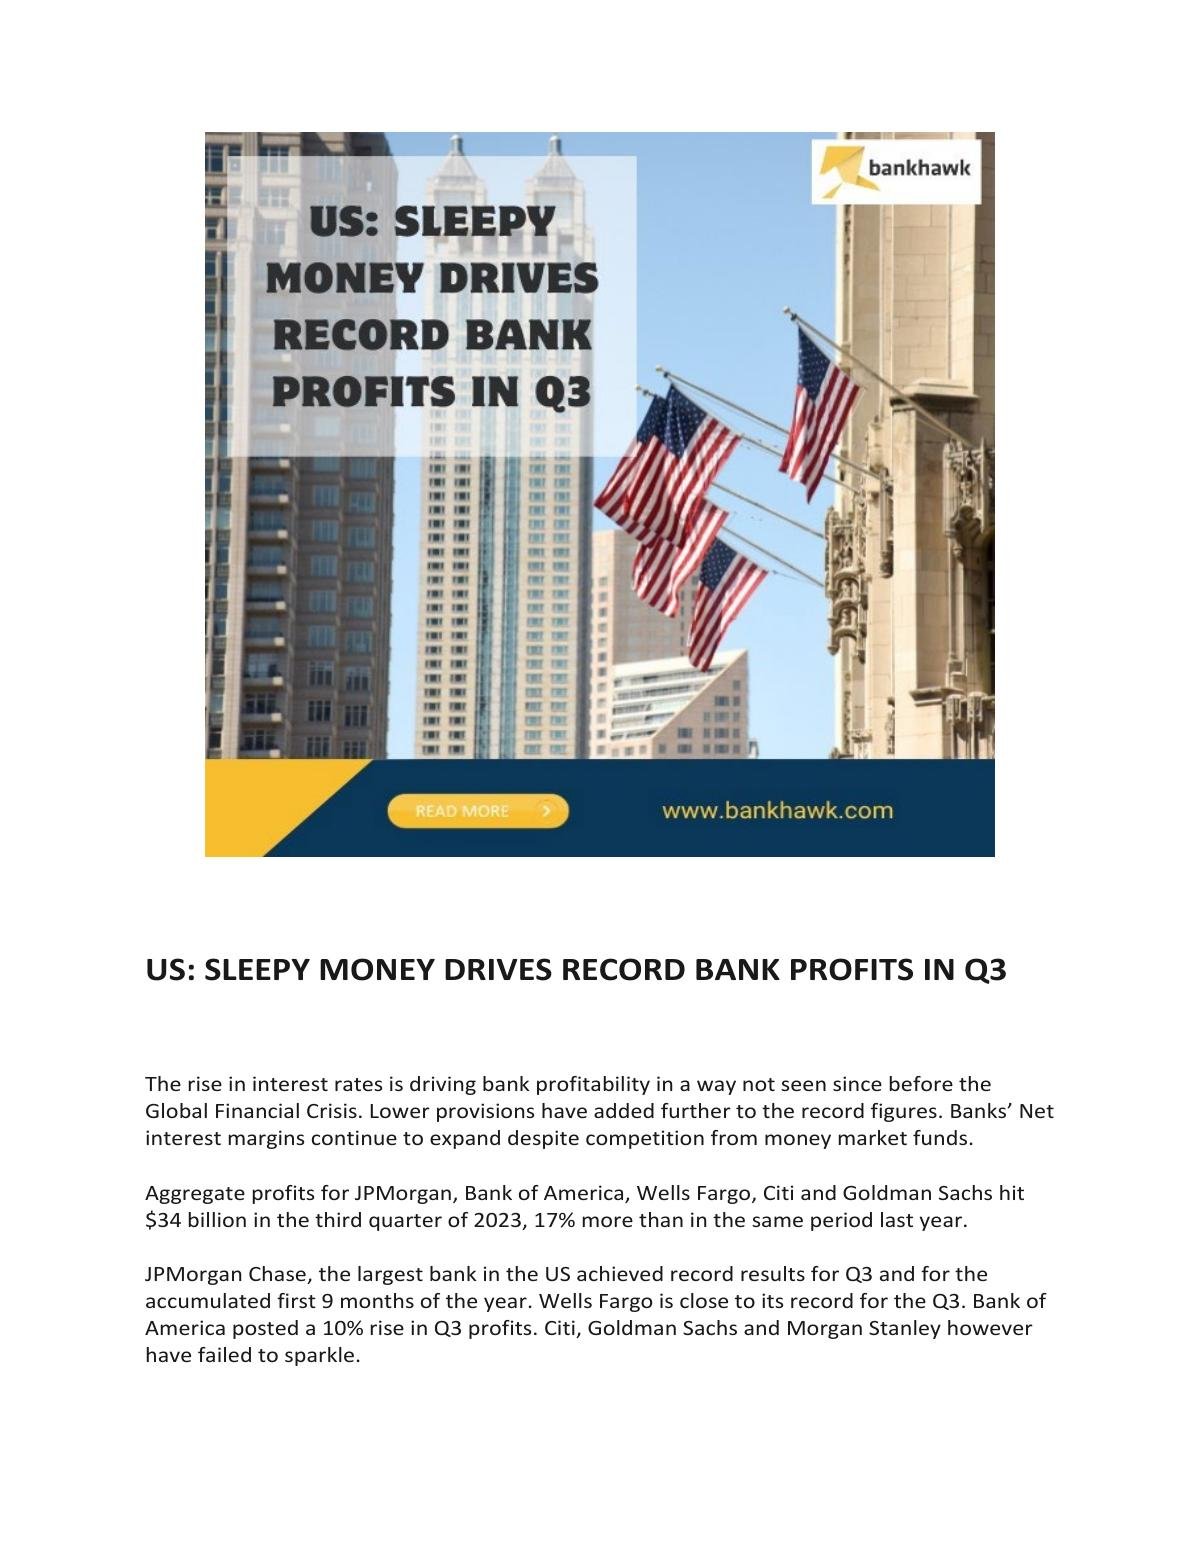 US: Sleepy Money Drives Record Bank Profits in Q3